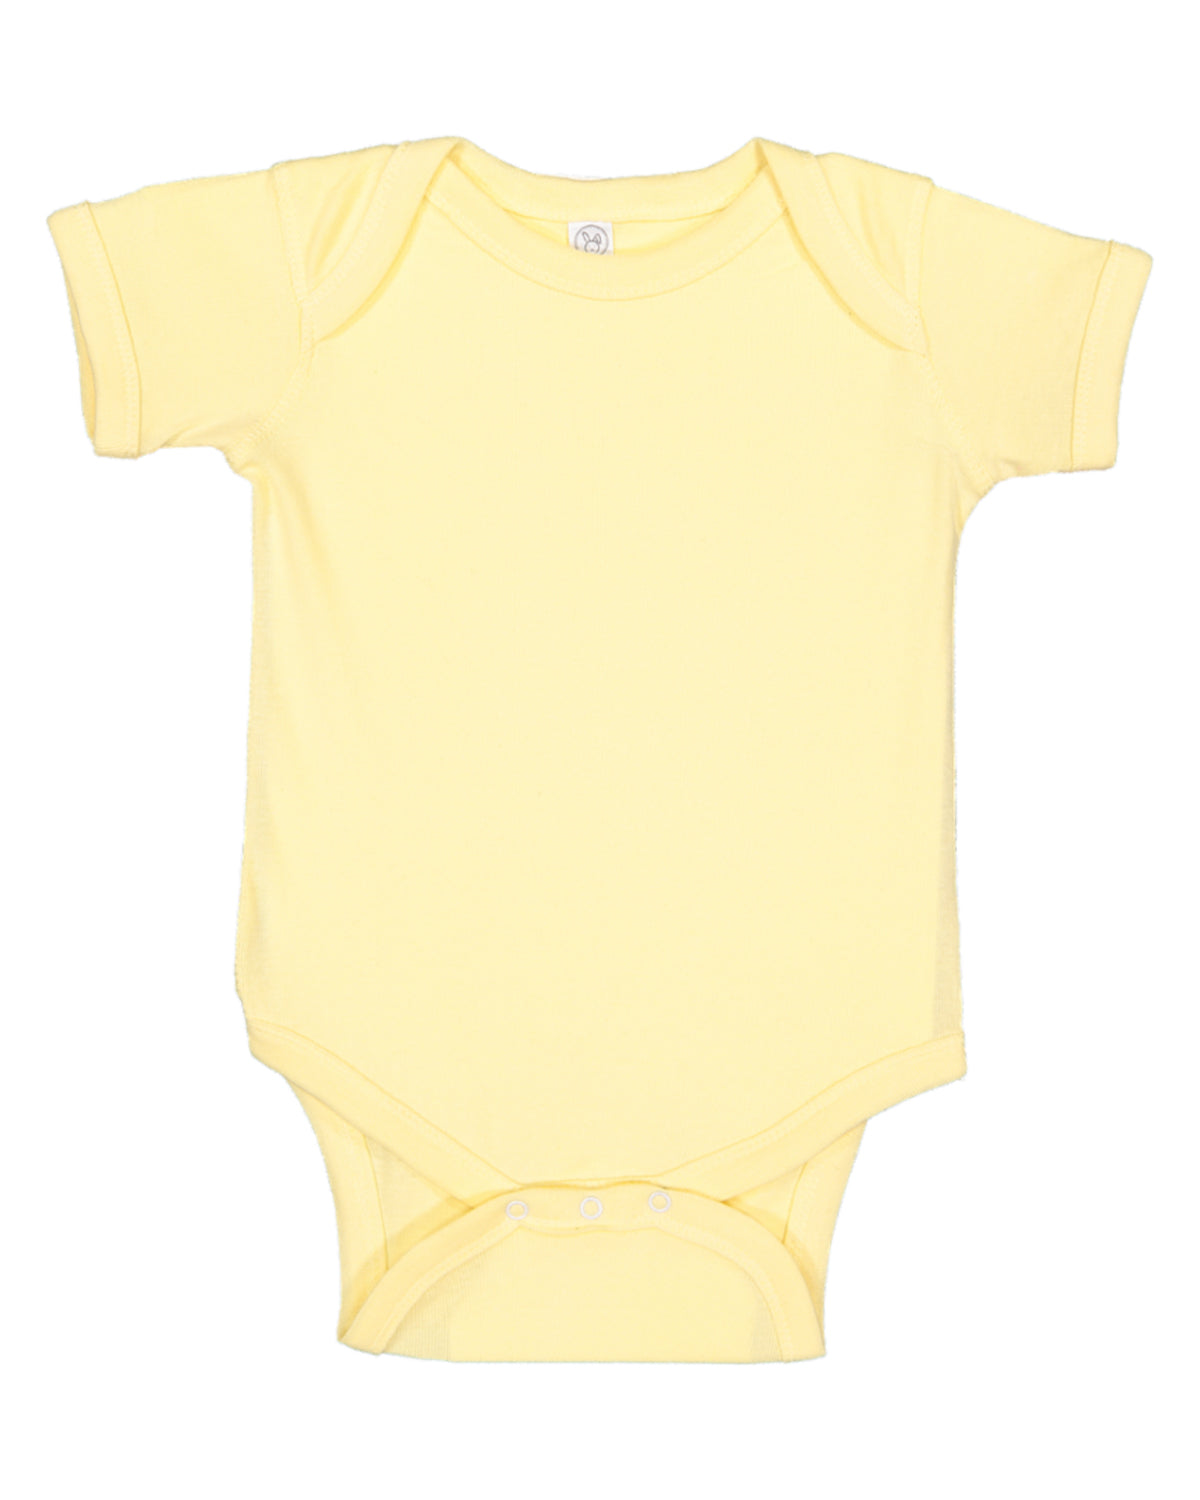 Short Sleeve -- Baby Bodysuit / Onesie -- 100% Cotton -- Light Yellow